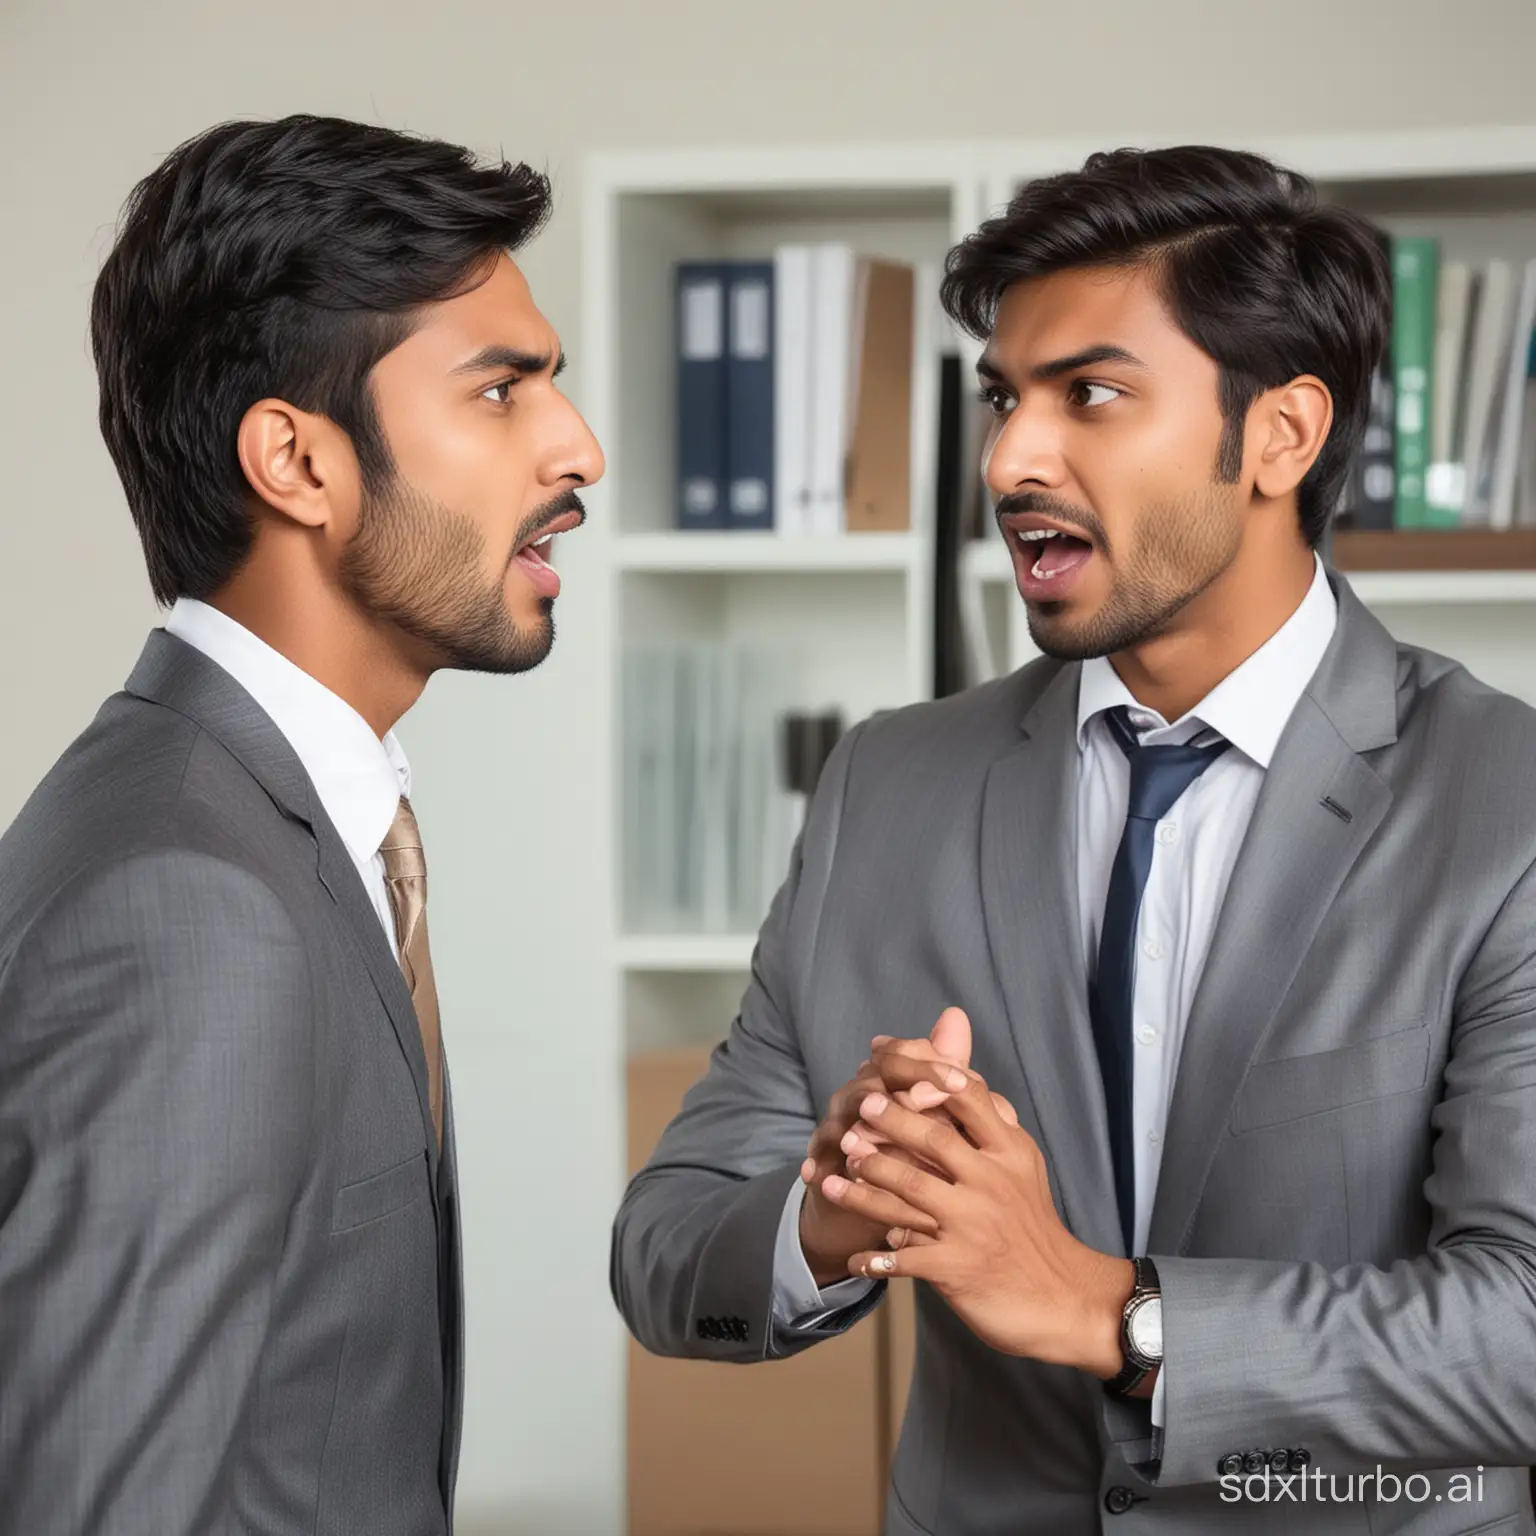 Office-Conflict-Indian-Businessman-vs-Colleague-Dispute